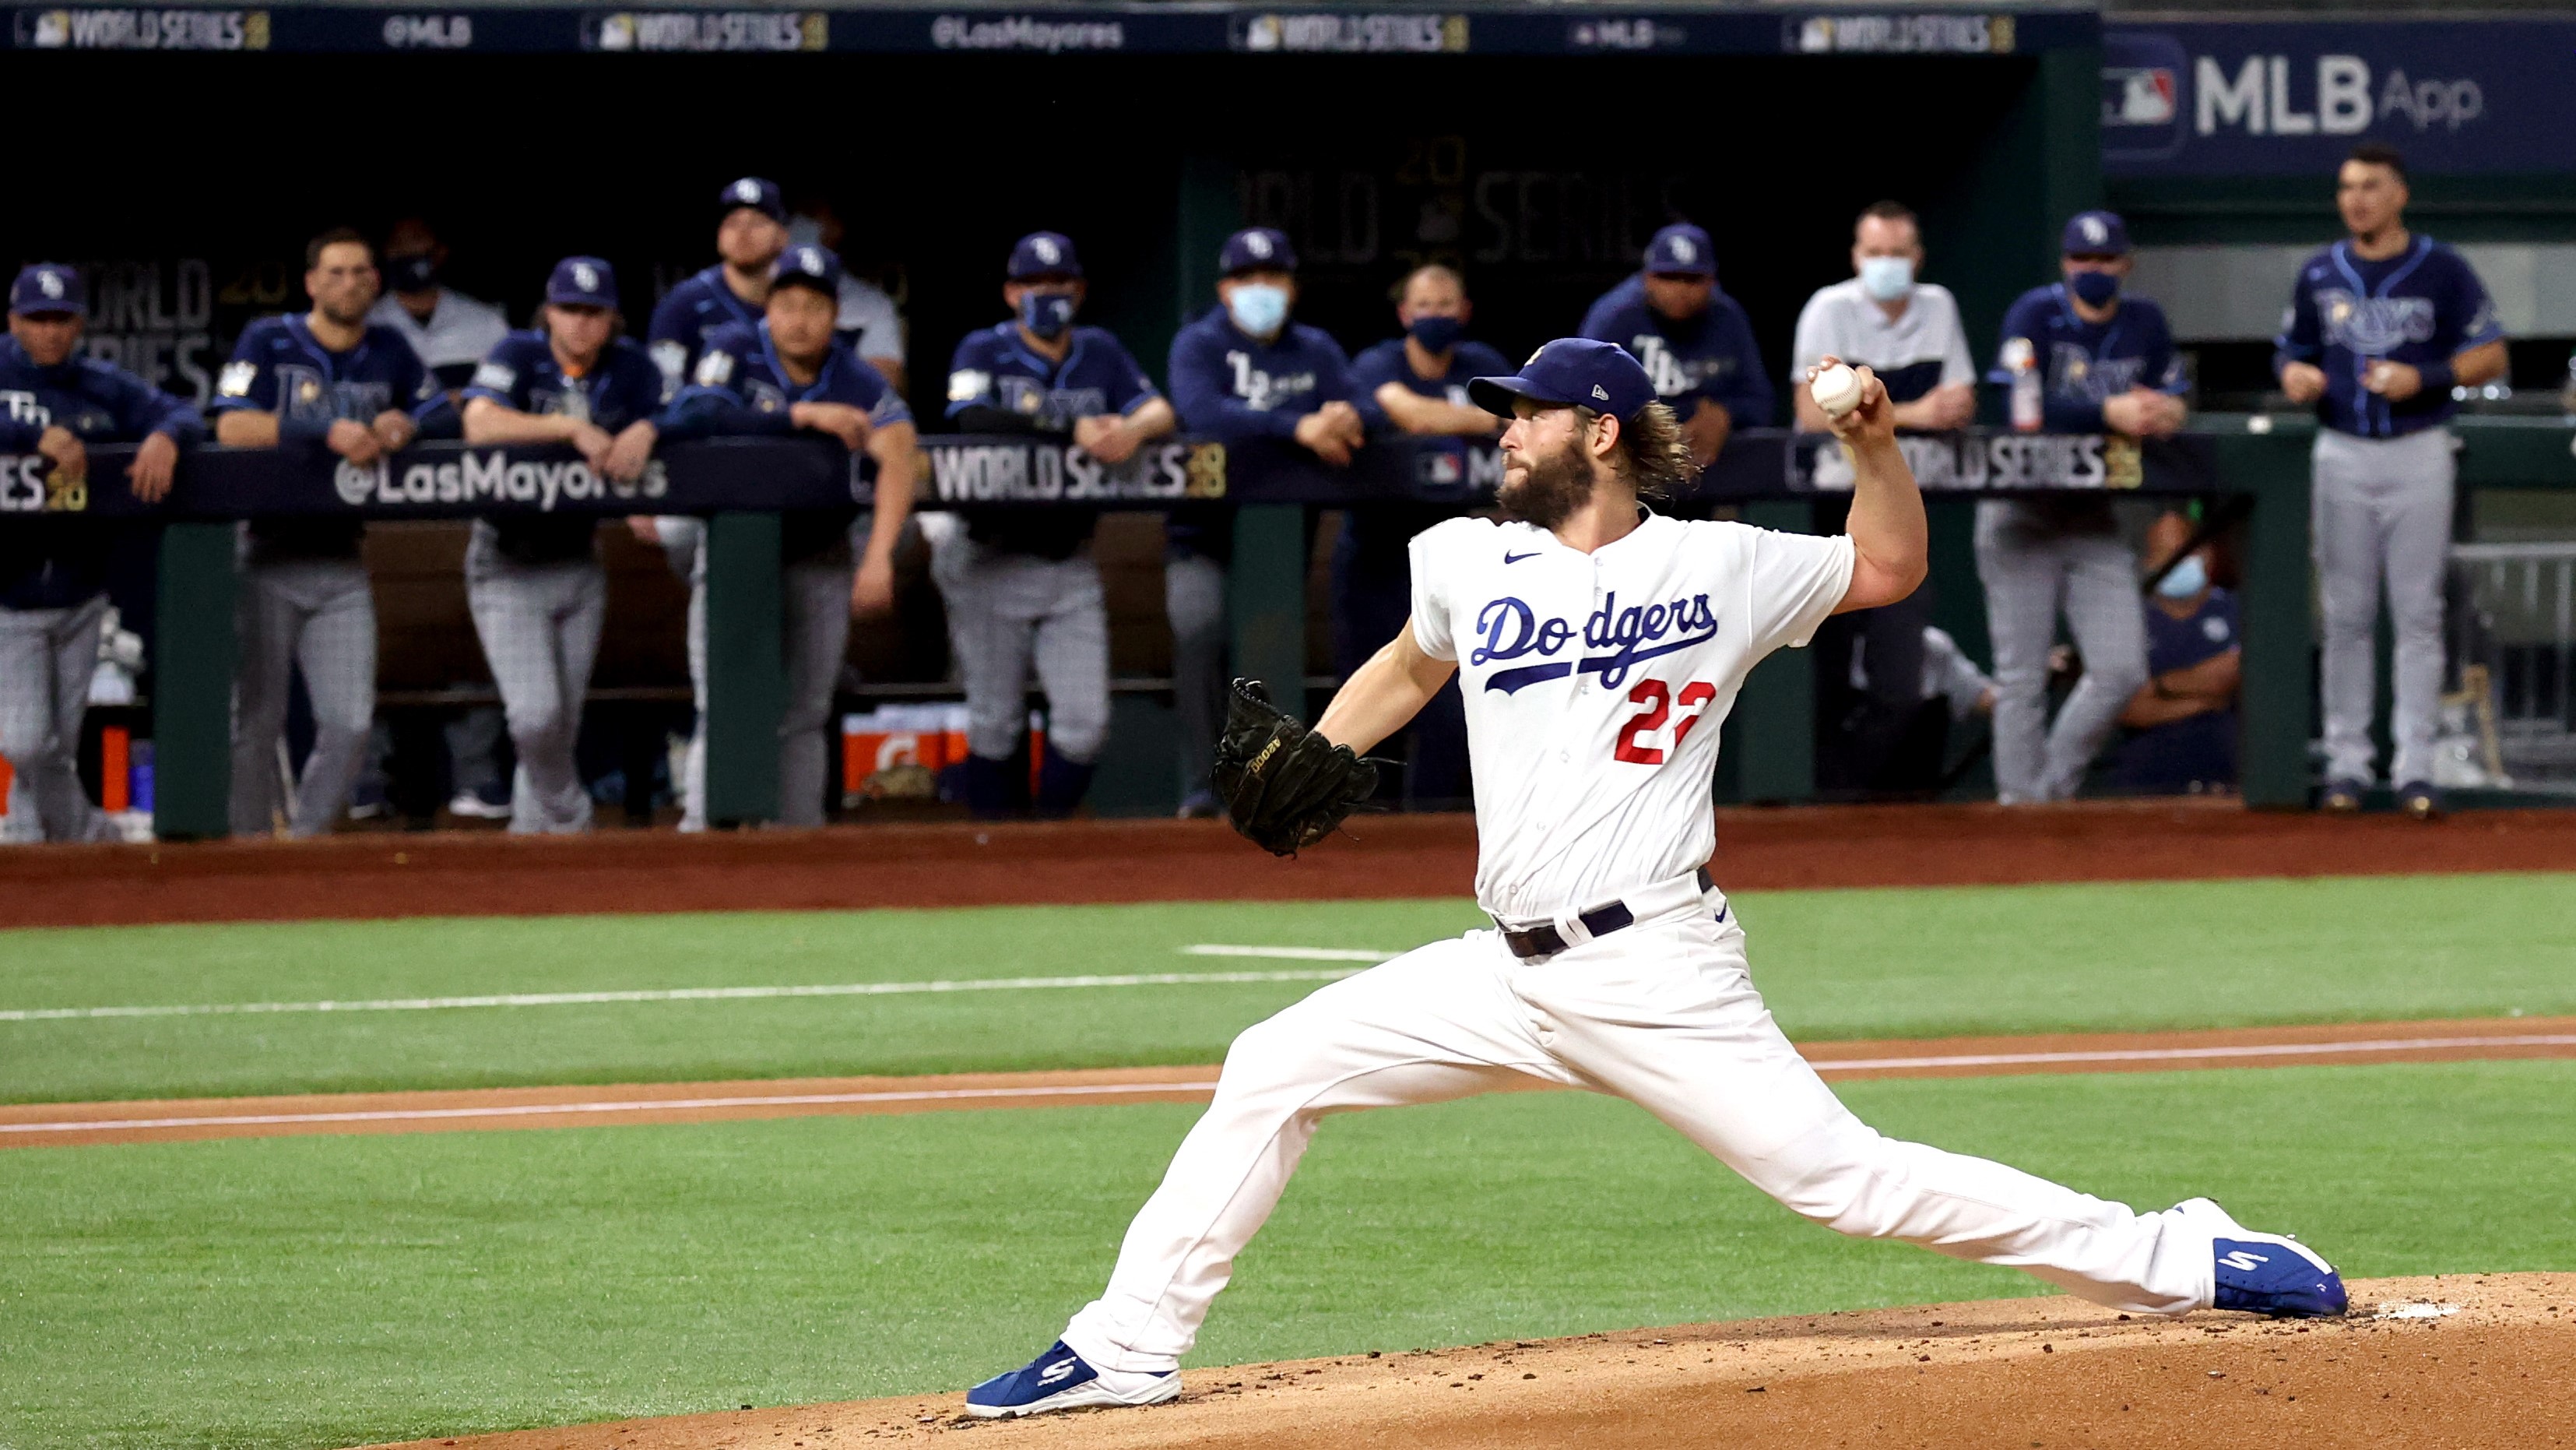 Kershaw, LA stars shine, Dodgers top Rays 8-3 in WS opener AP